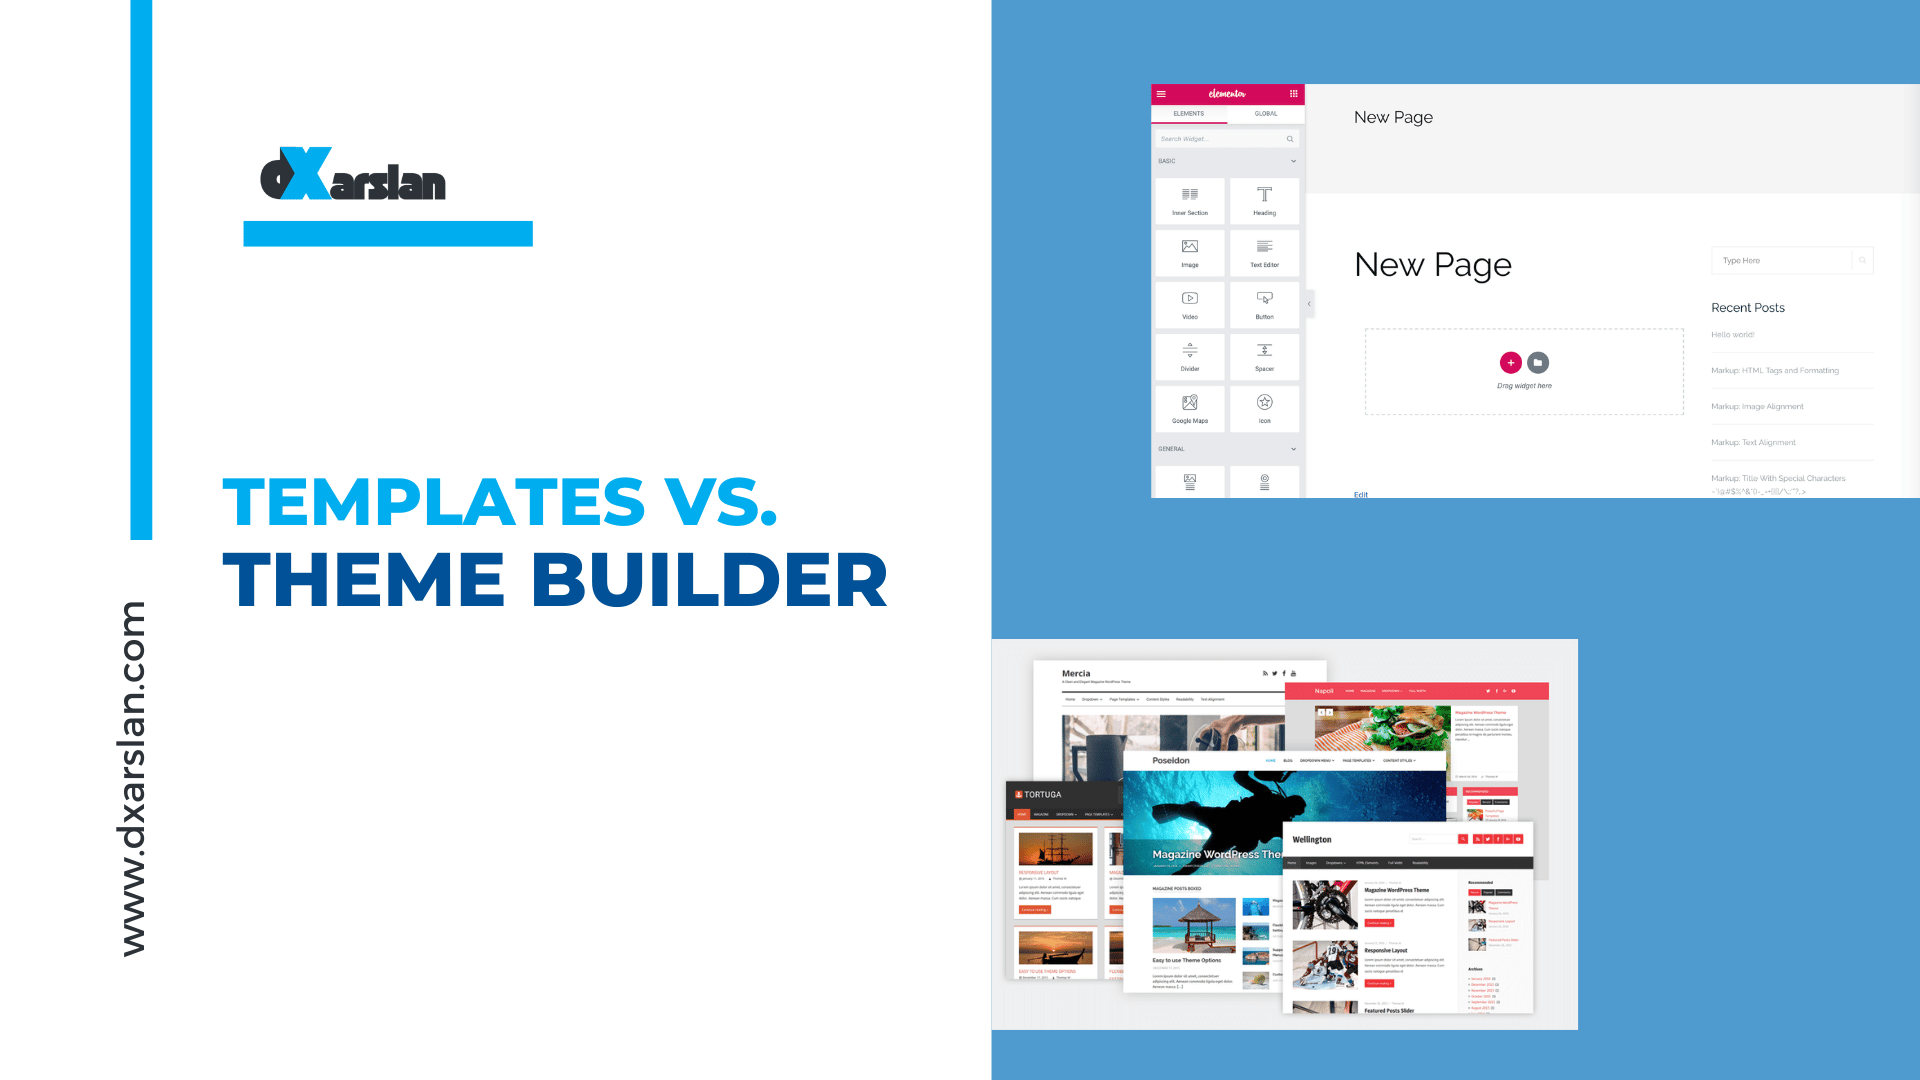 Elementor theme builder vs templates